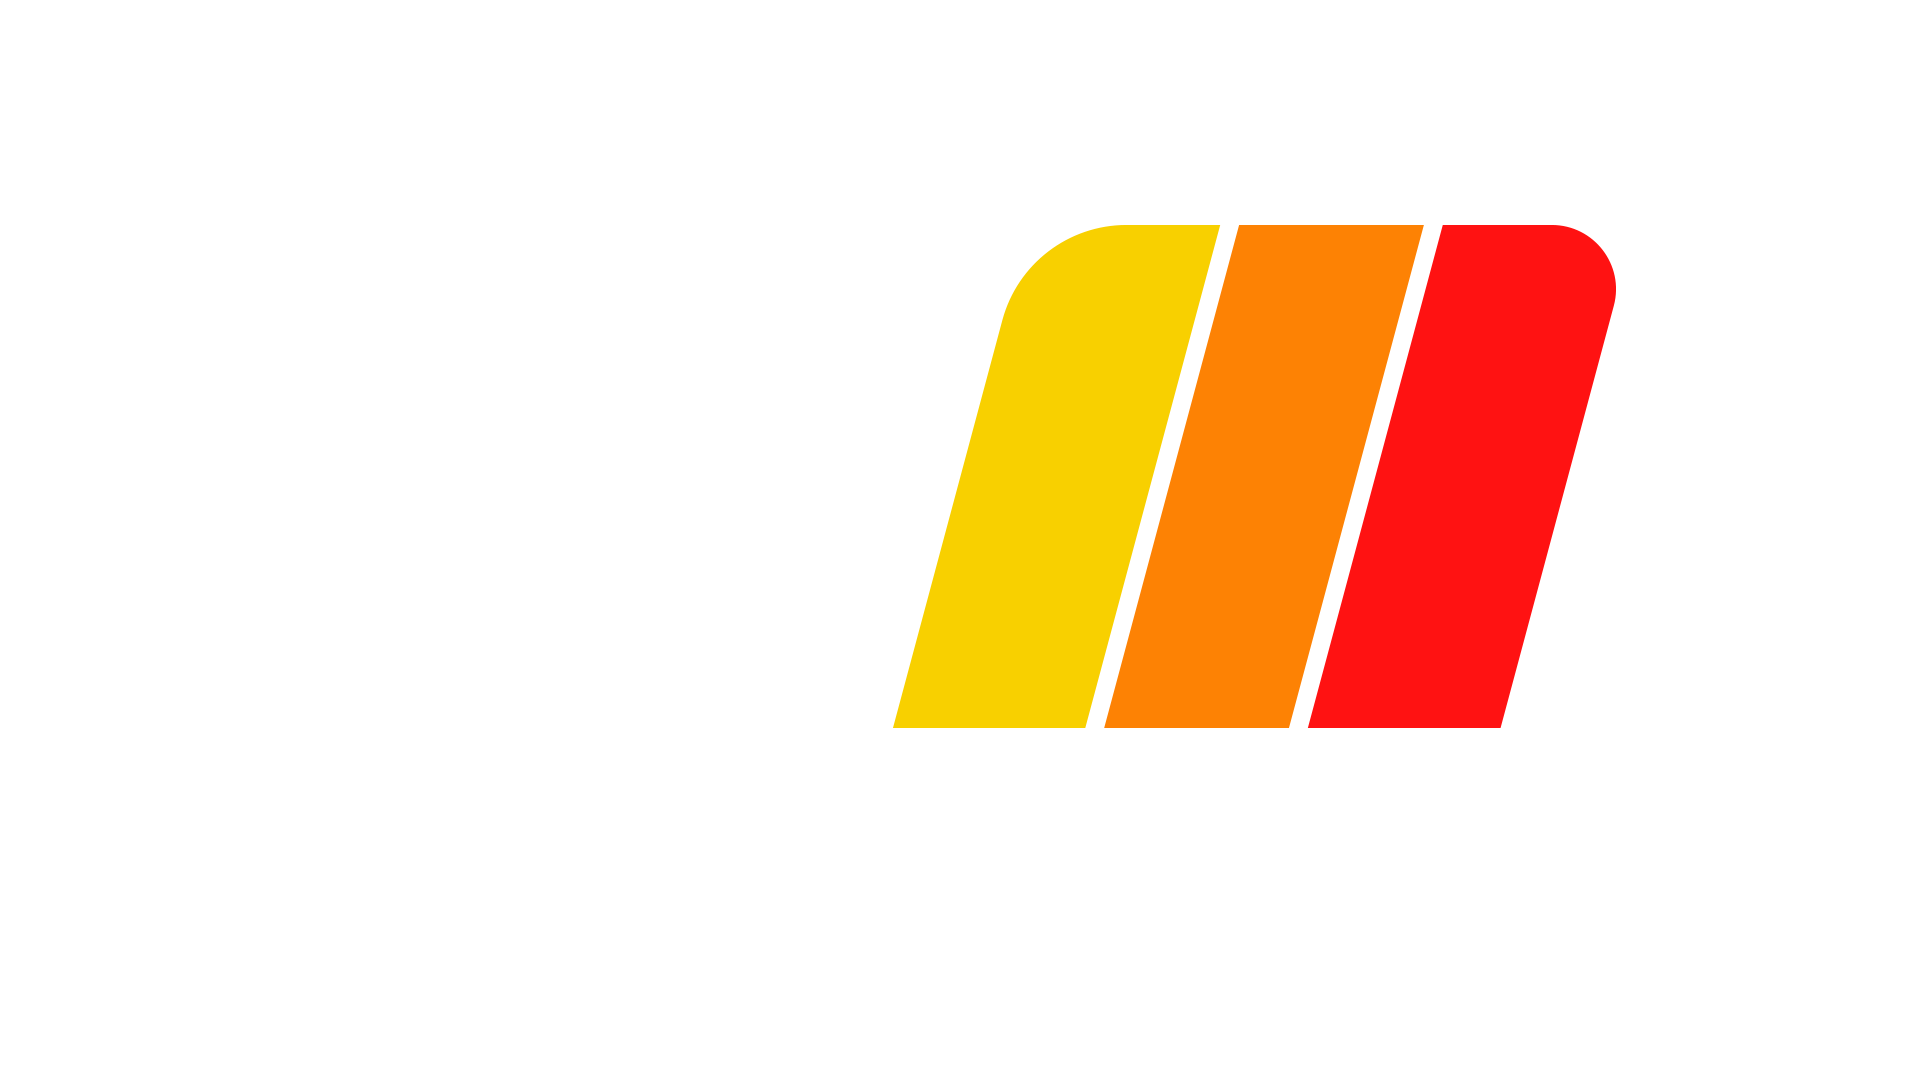 Gabir Motors logo with the text GABIR MOTORS written at the bottom